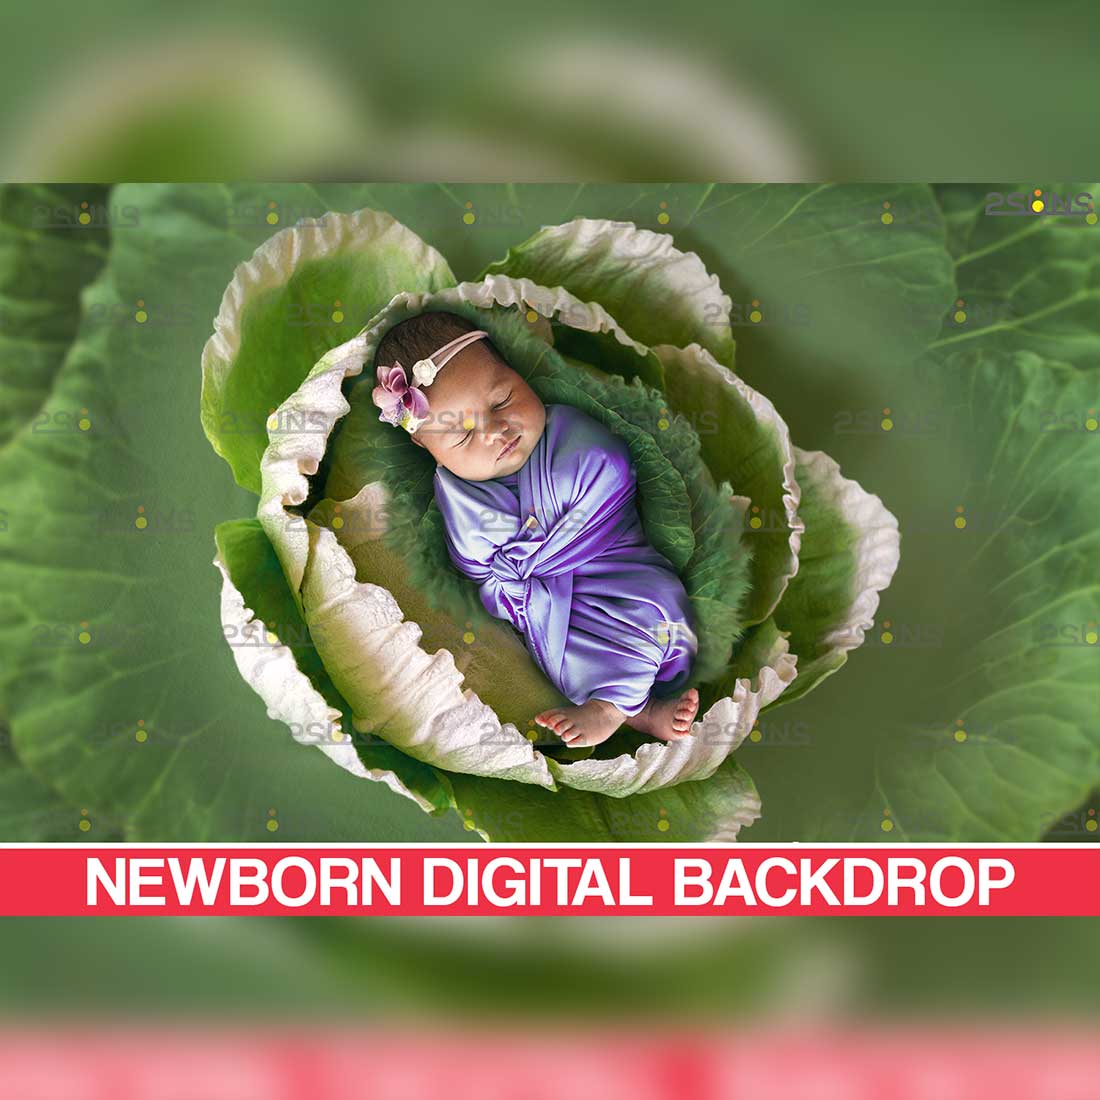 Newborn Nature Digital Backdrops Cover Image.